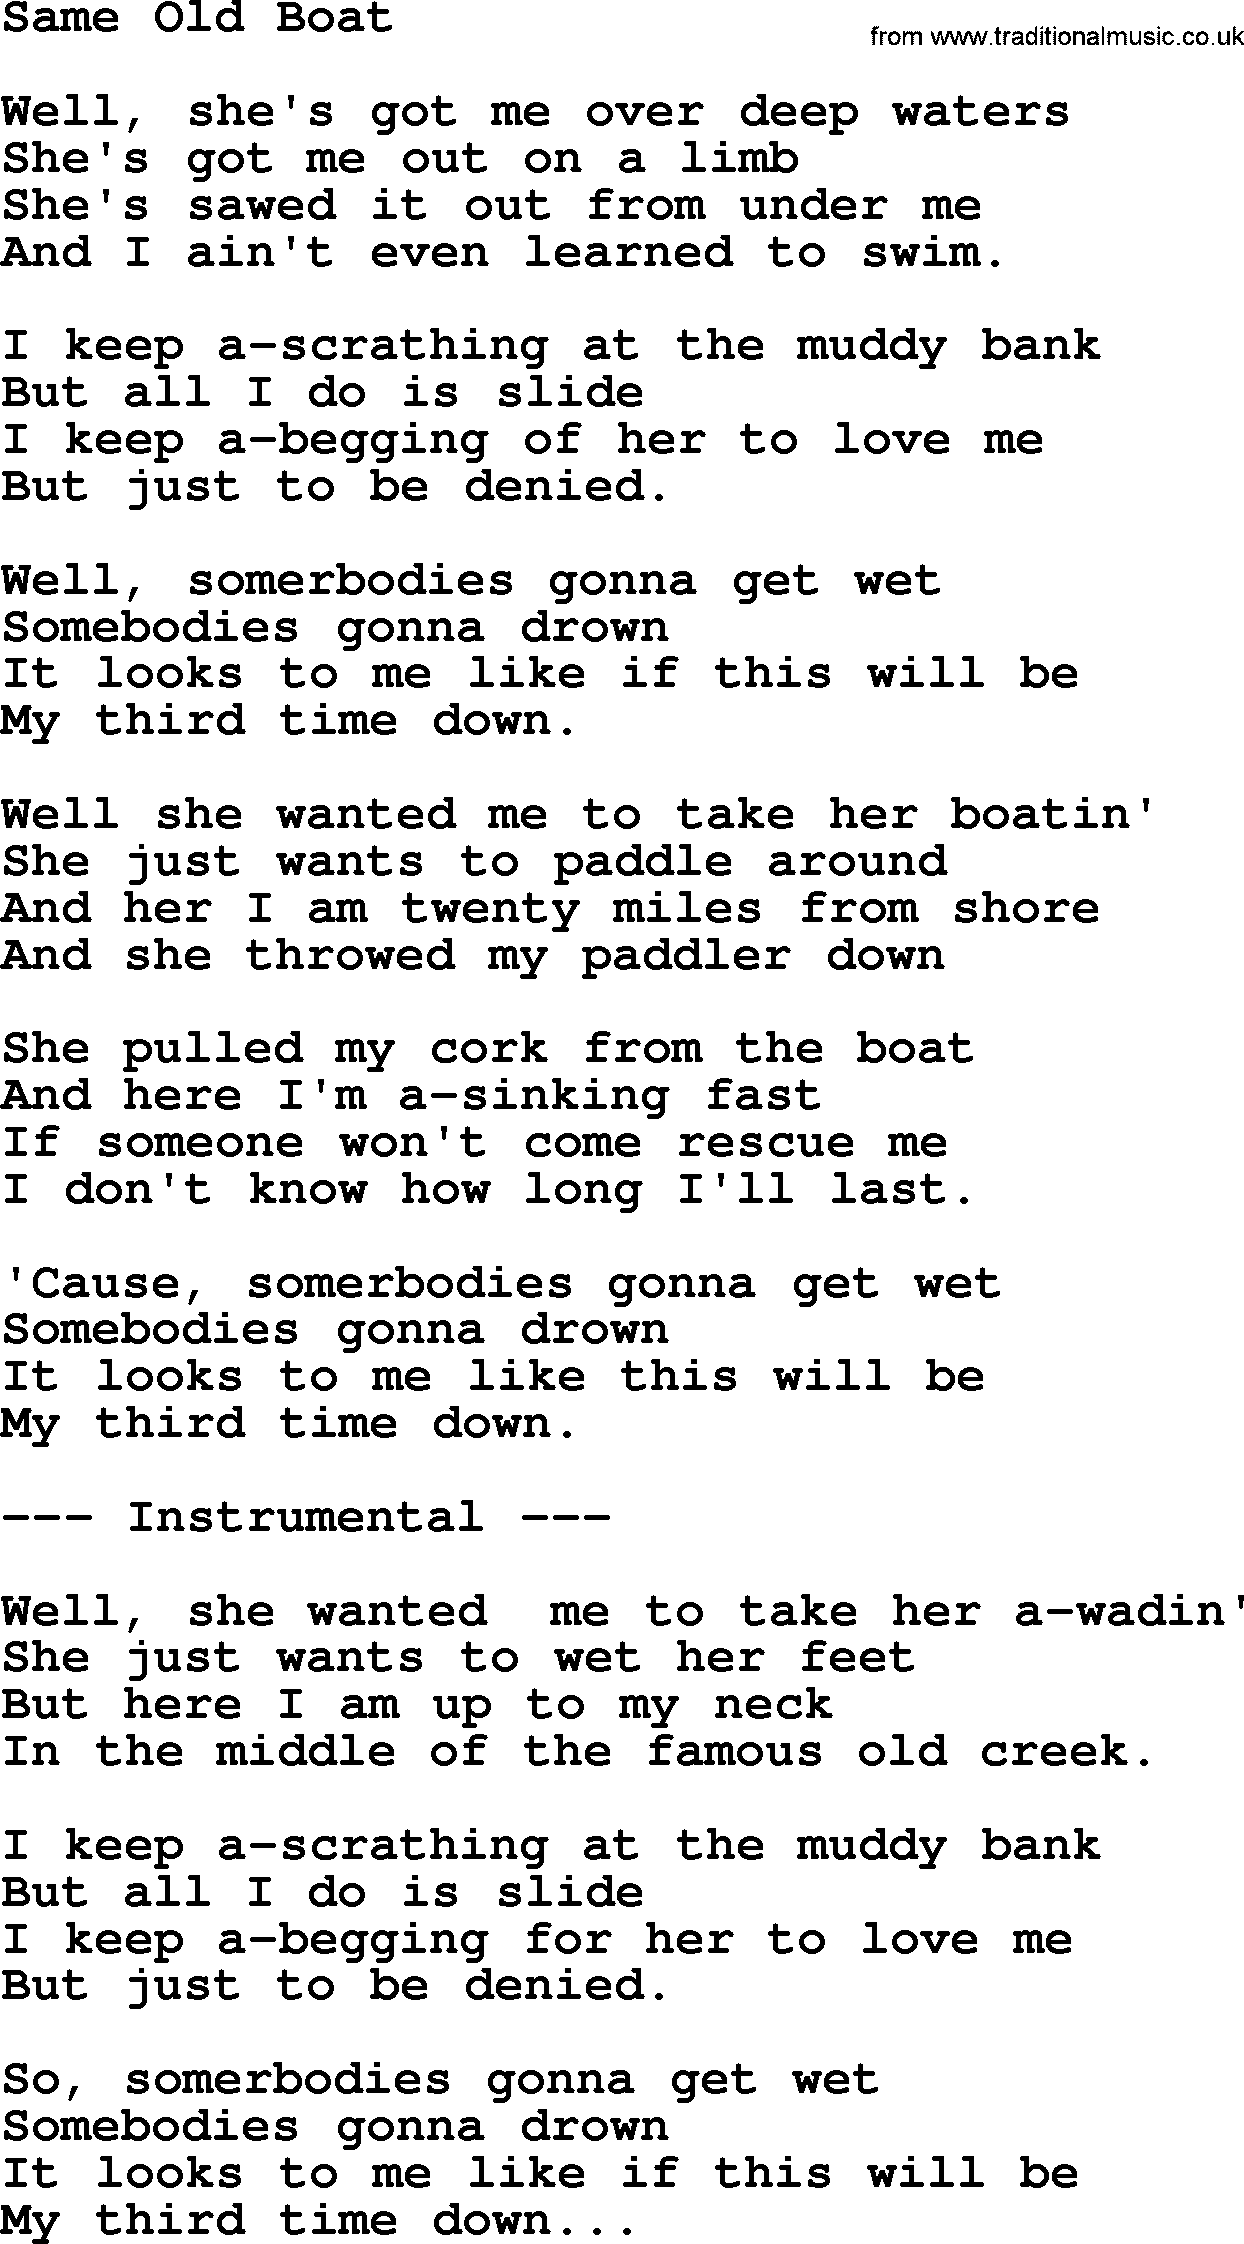 George Jones song: Same Old Boat, lyrics